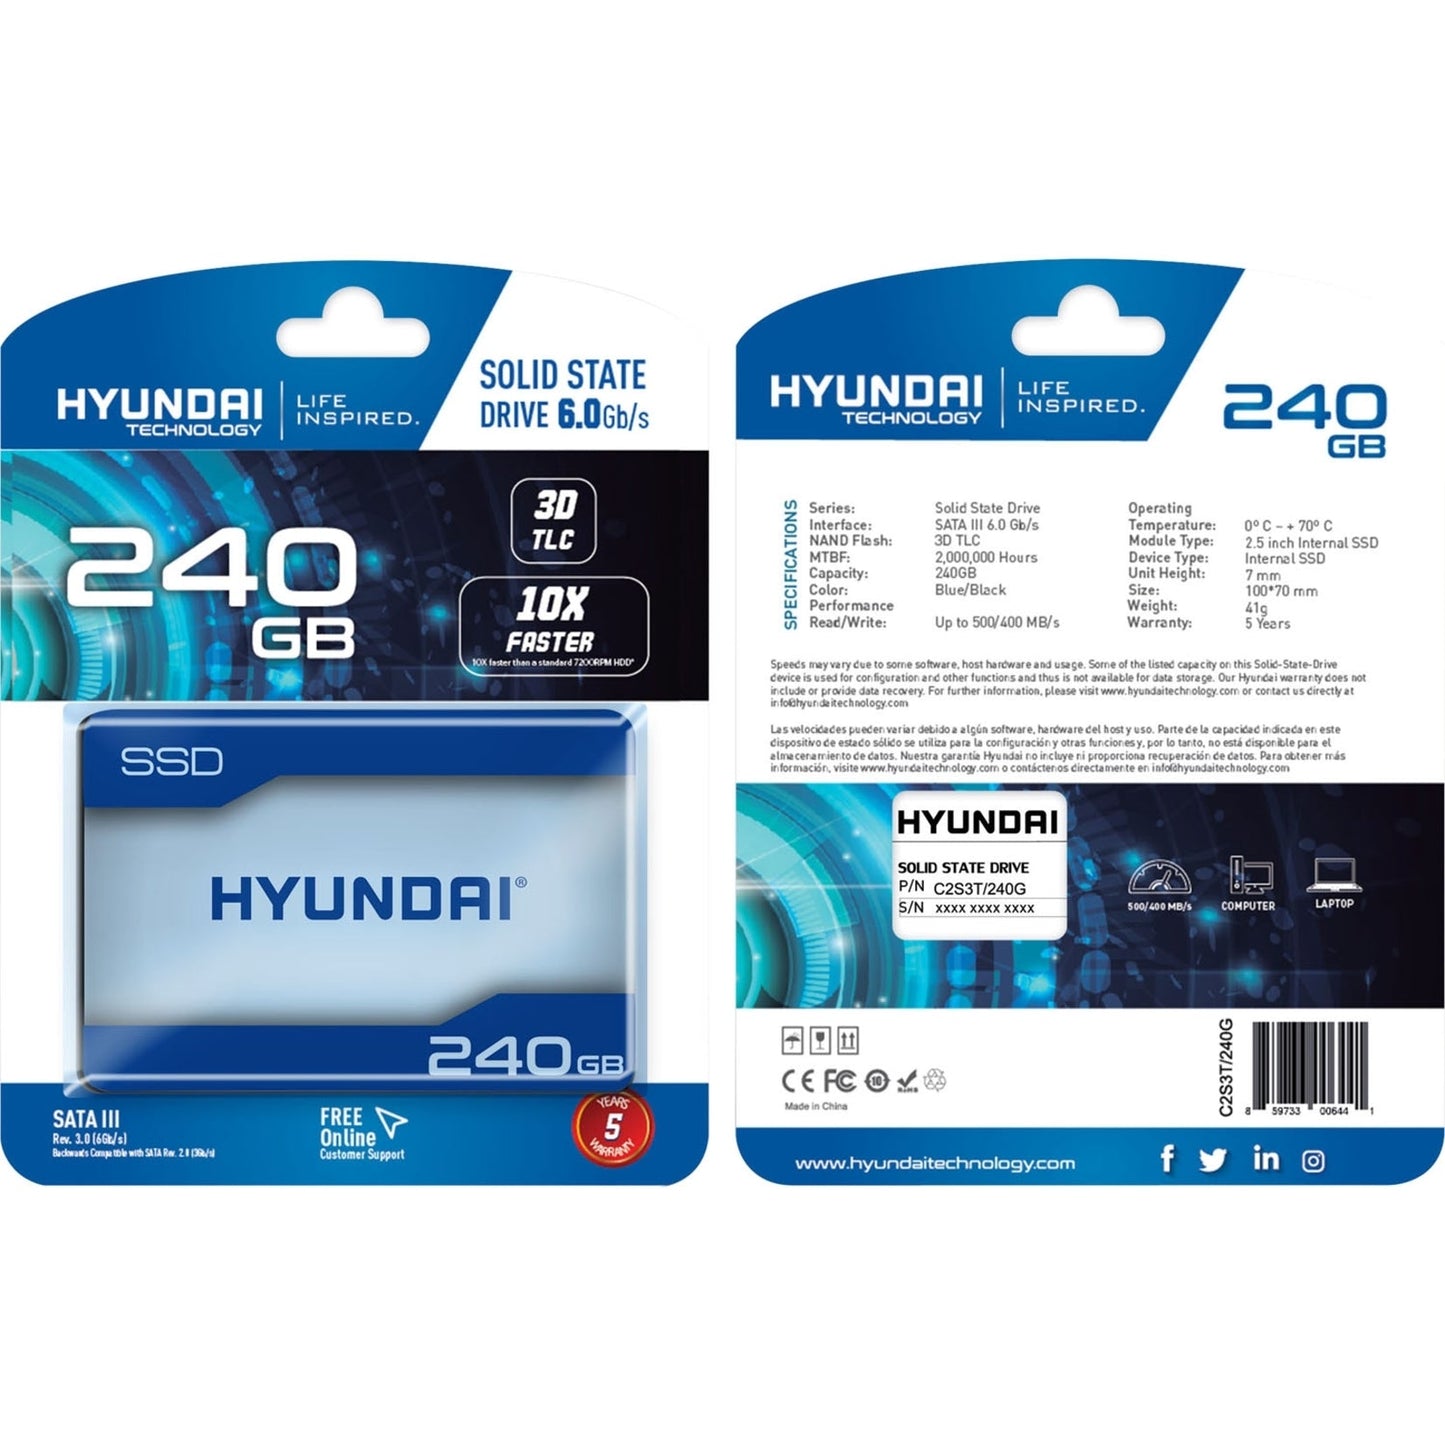 Hyundai 240GB SATA 3D TLC 2.5" Internal PC SSD Advanced 3D NAND Flash Up to 550/450 MB/s